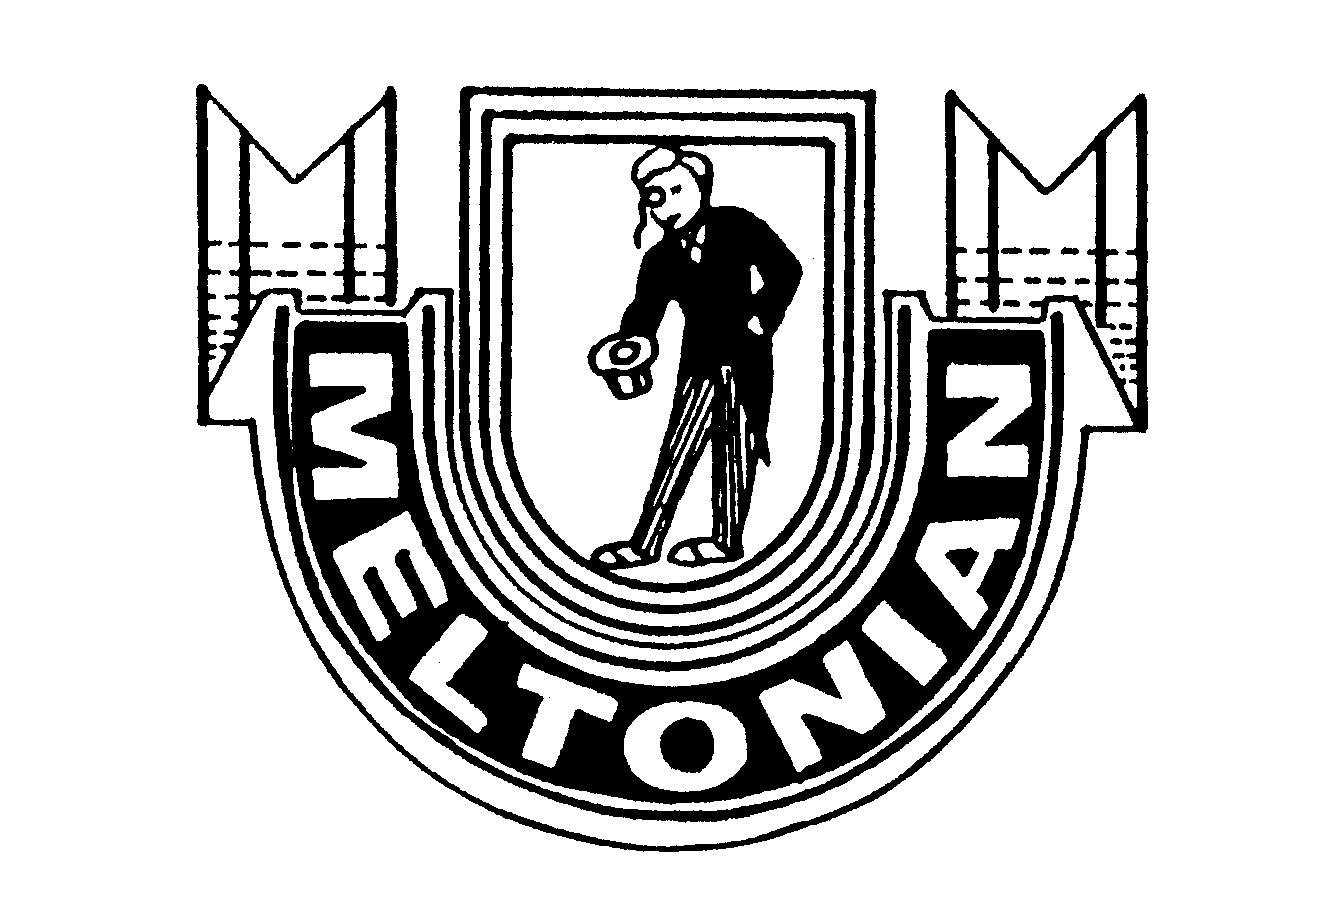  MELTONIAN